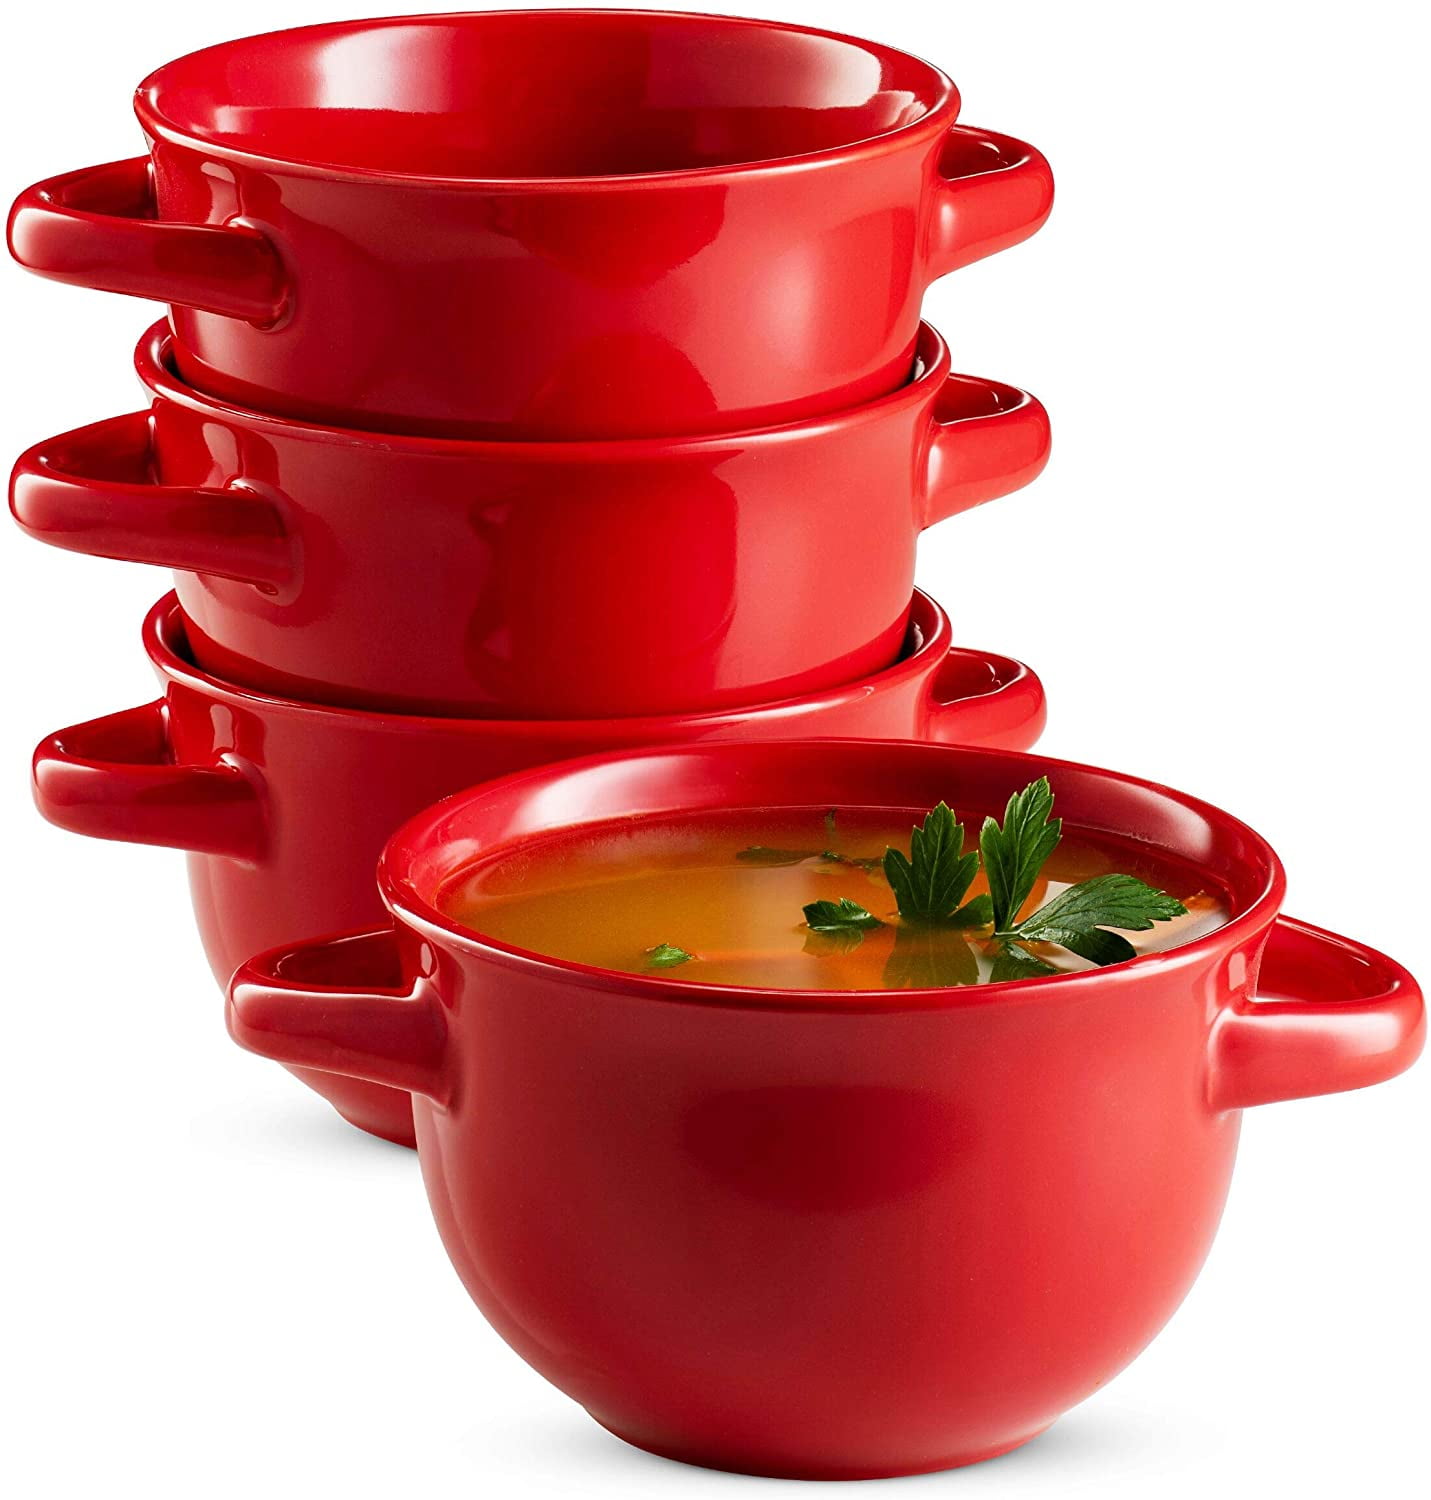 Retro Diner Ware Dessert Bowls Individual Soup And Chili Bowls Restaurant Ware 4 Vintage Hall USA Bean Pots #461